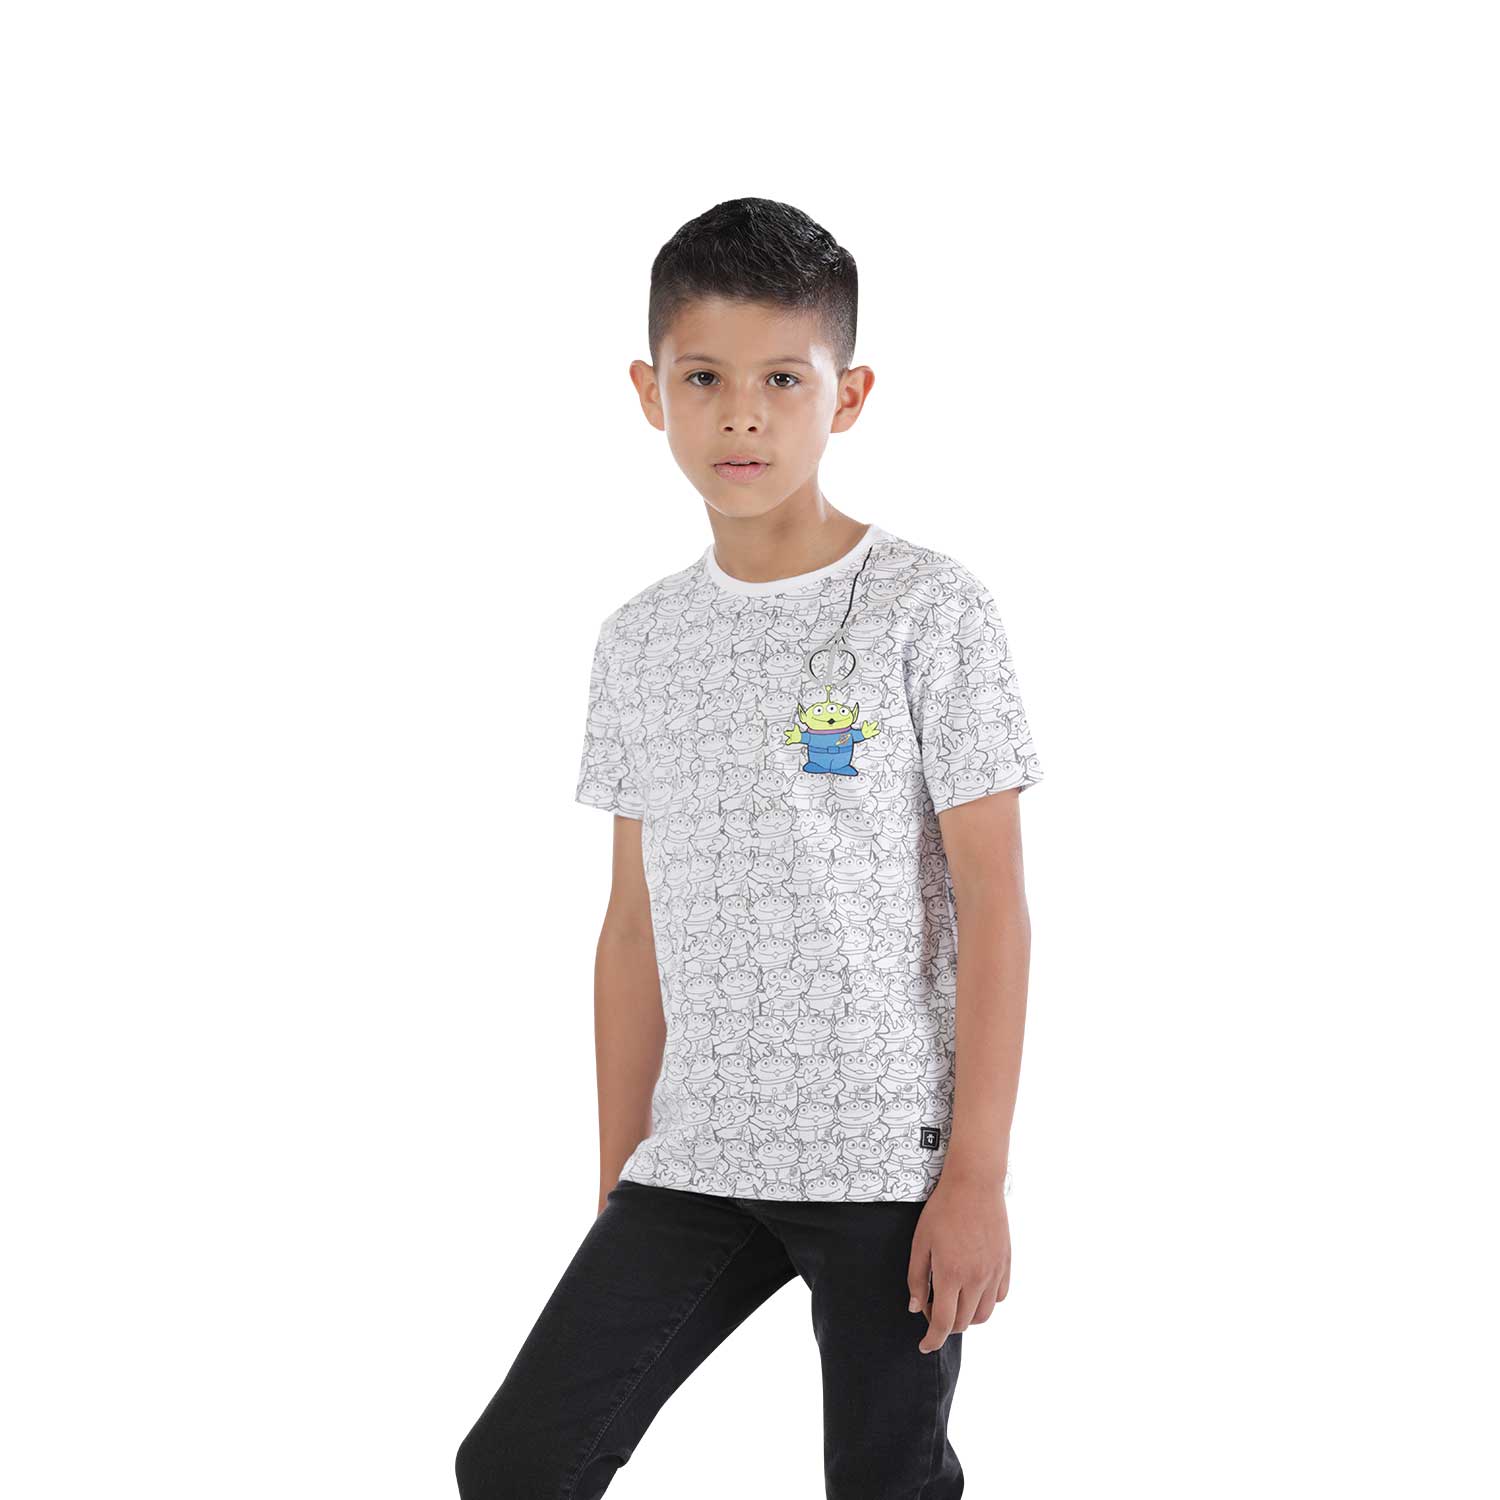 TOTTO Corporativo - Camisa Manga Corta para Niño Full Estampado Eption